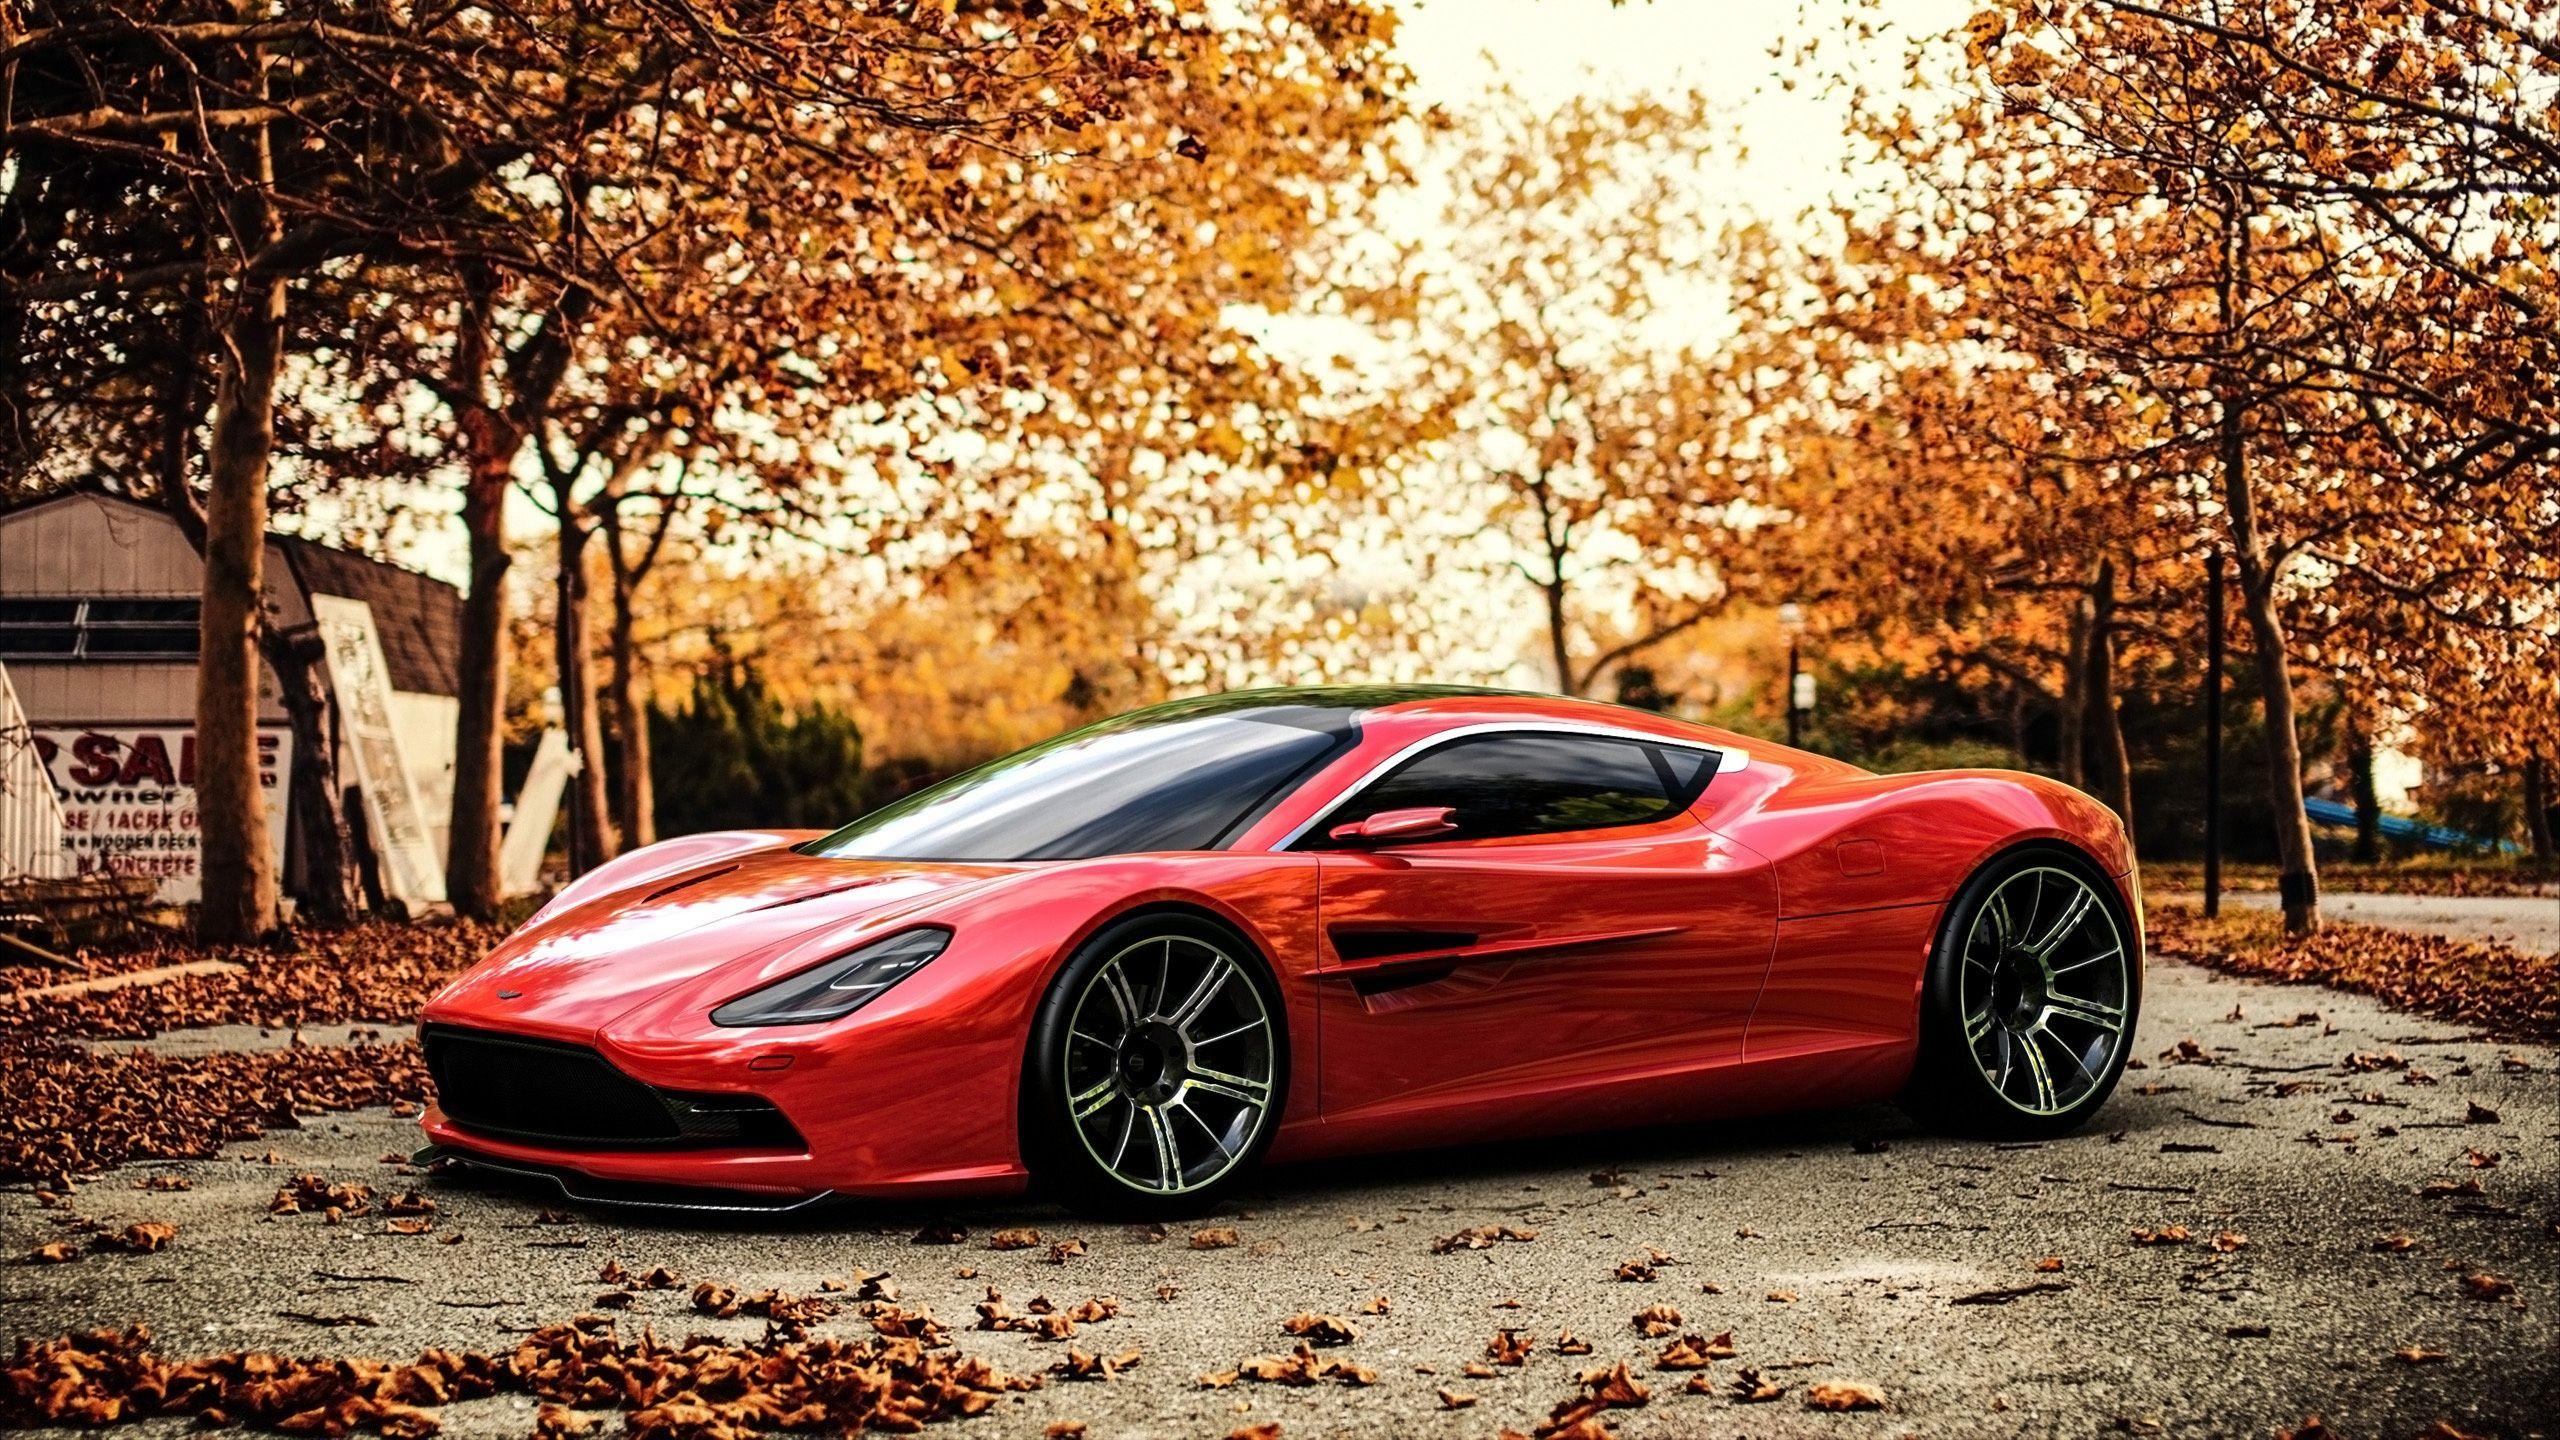 1K Aston Martin Pictures  Download Free Images on Unsplash